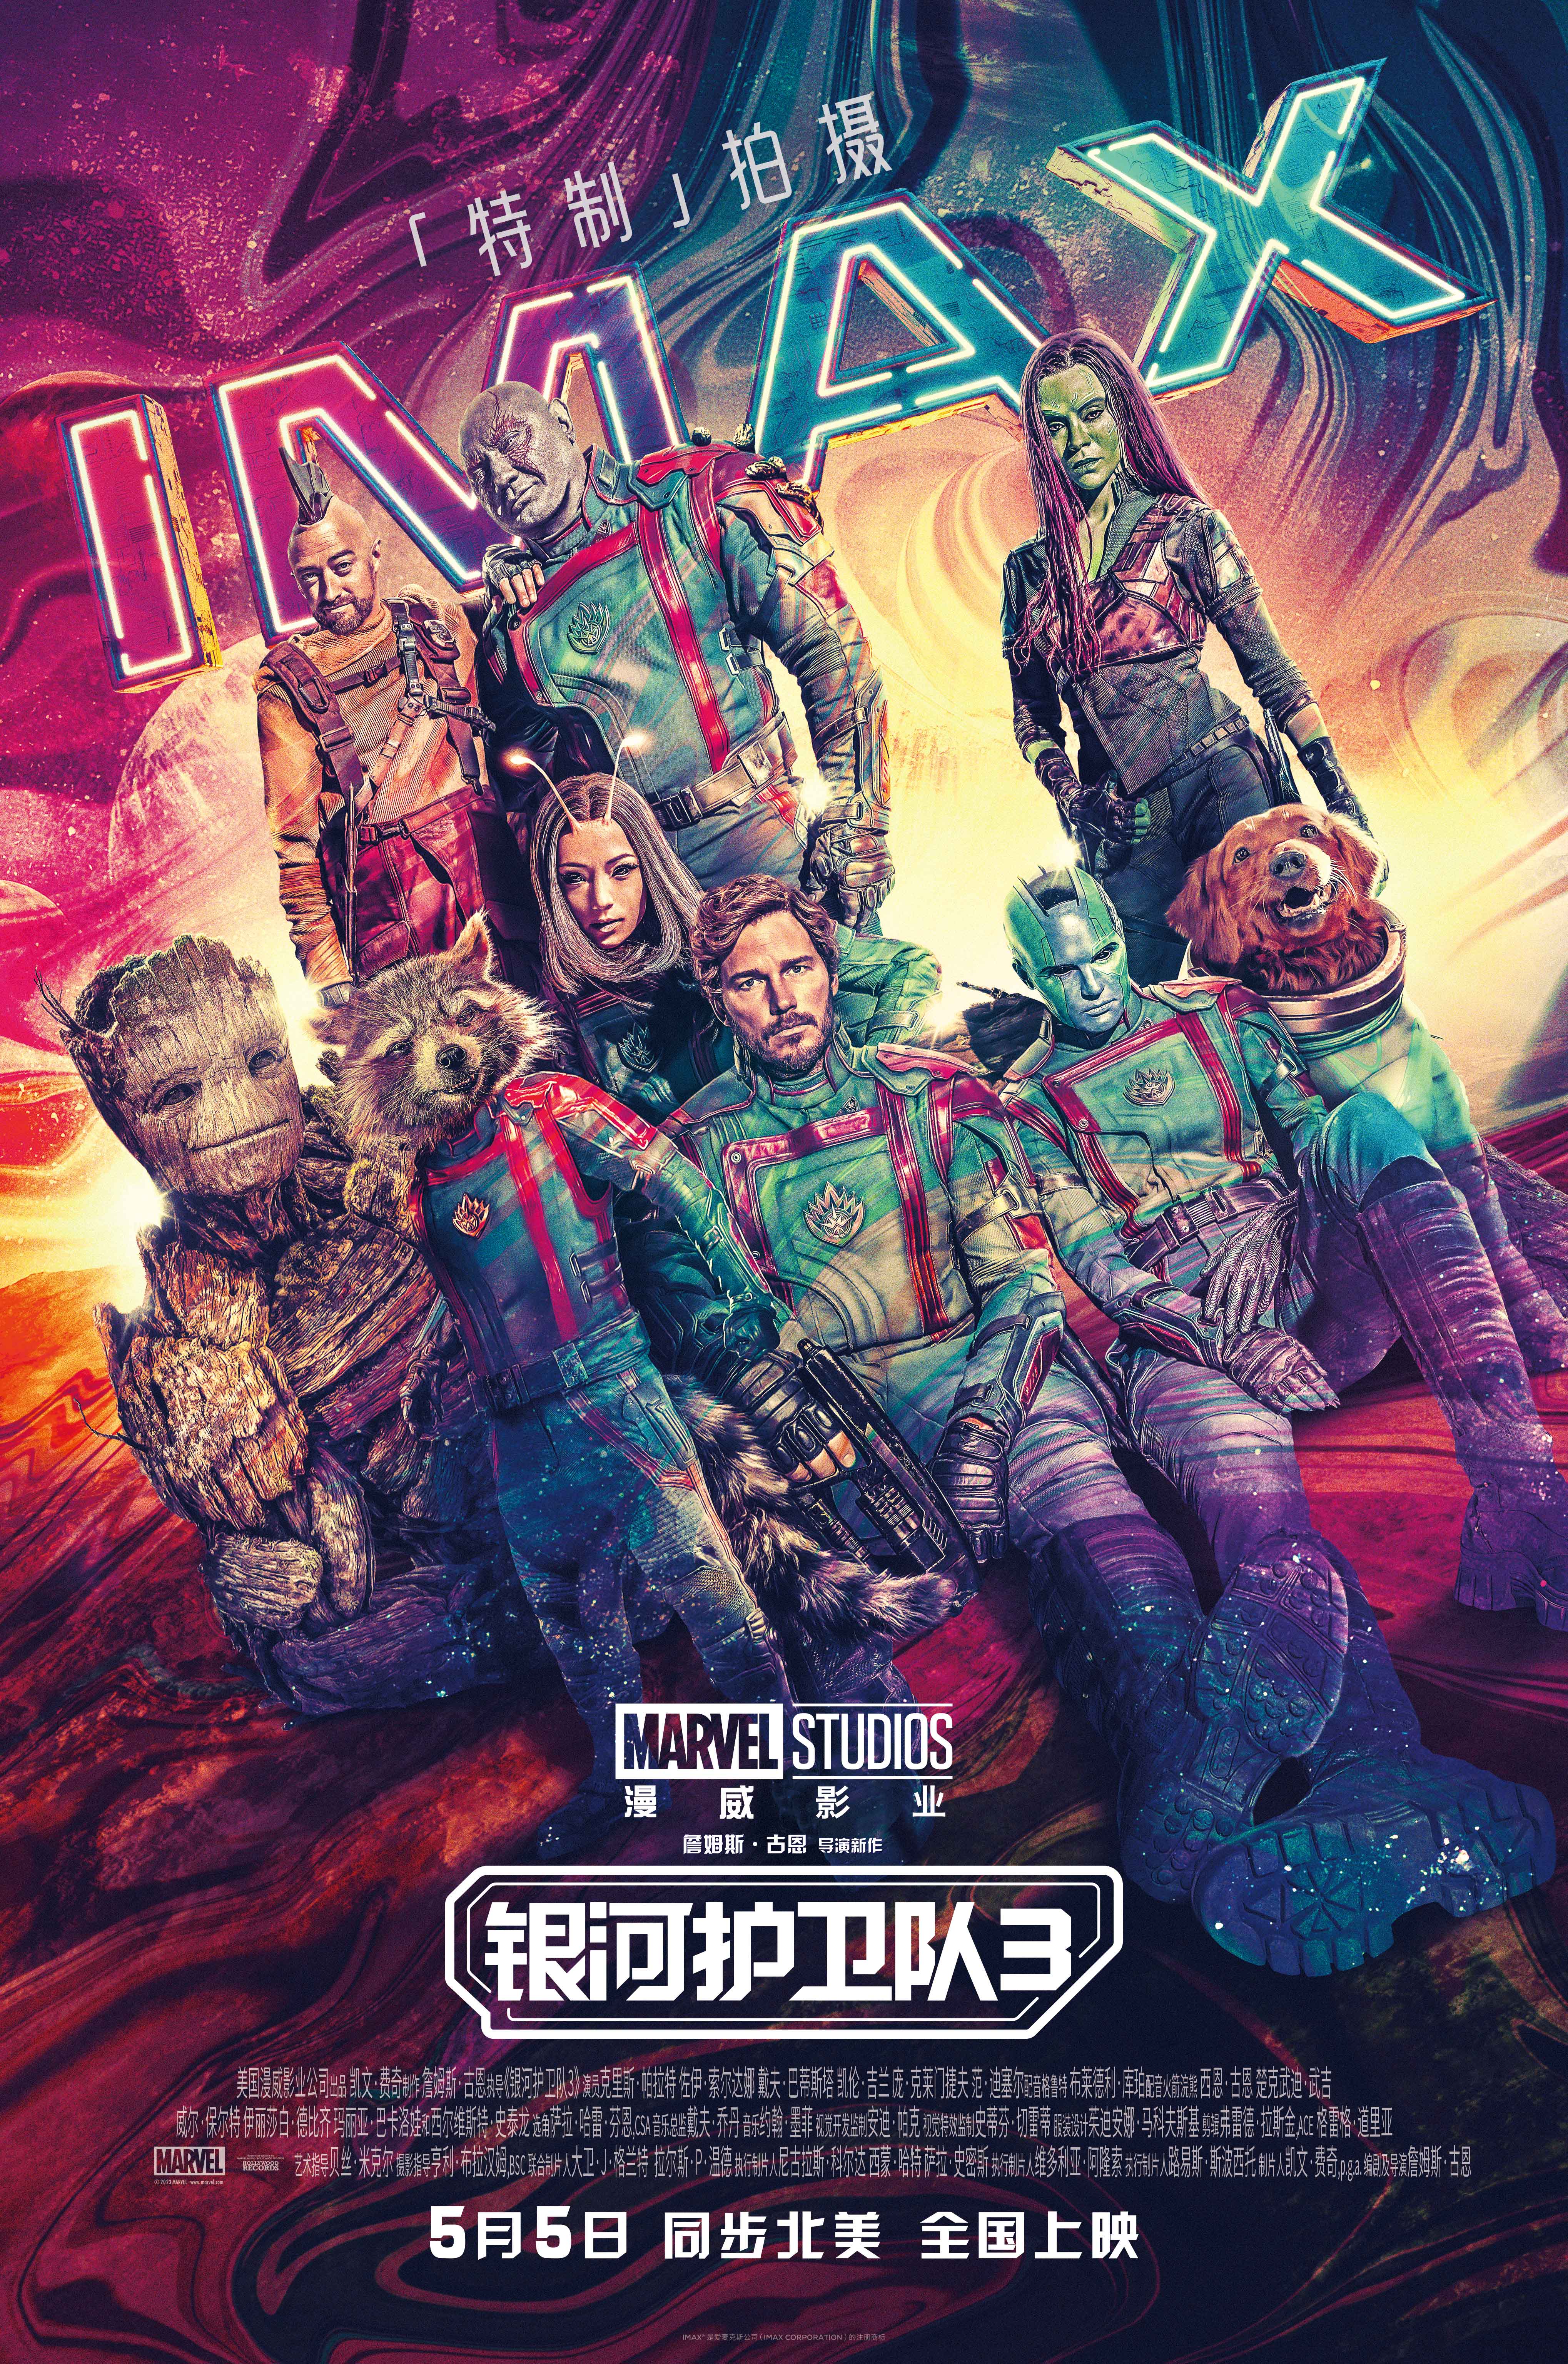 IMAX特制拍摄《银河护卫队3》专属海报发布 银河天团炫酷回归IMAX